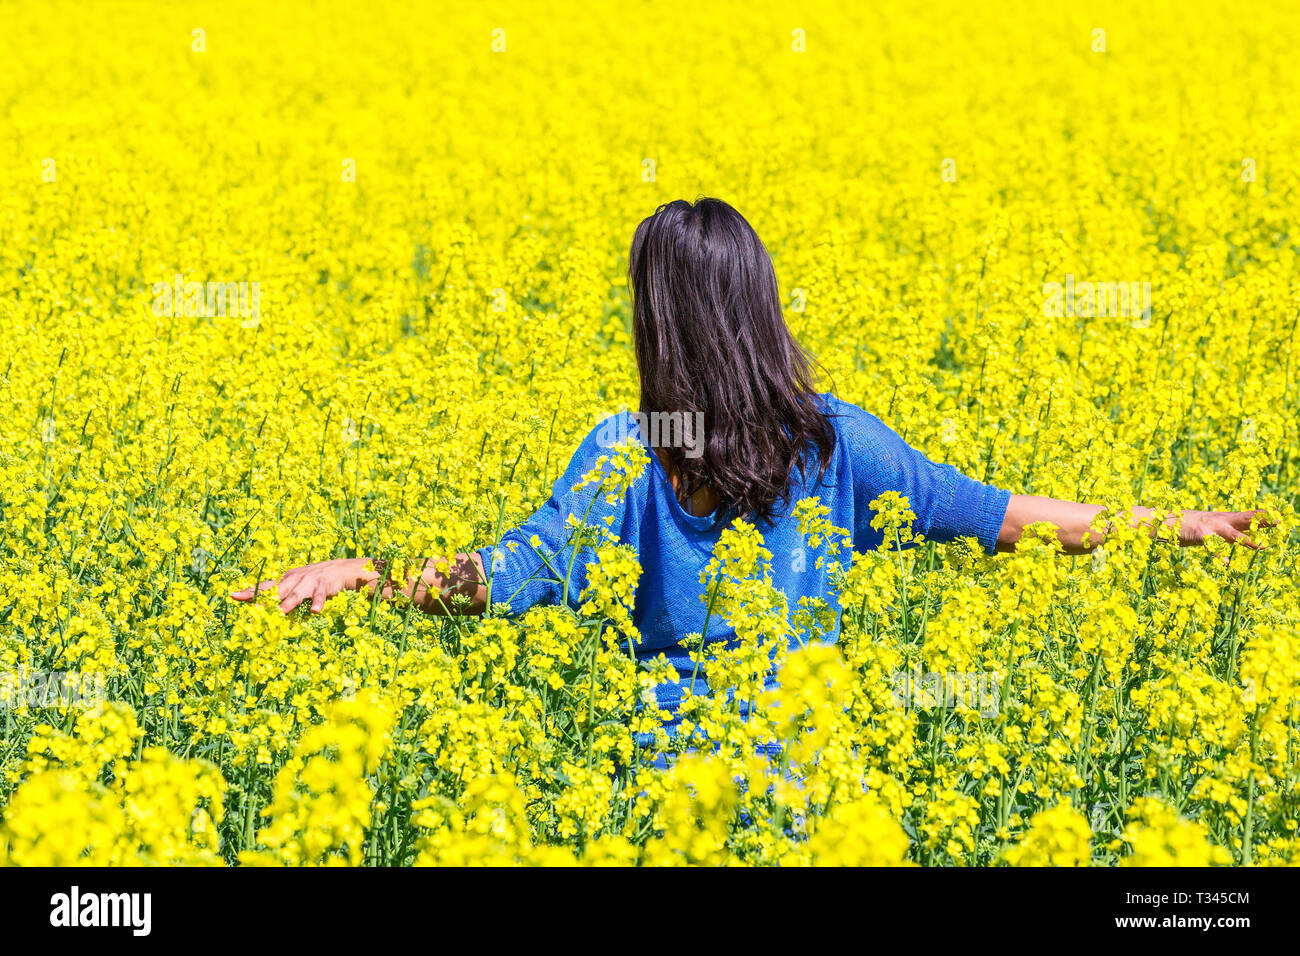 Junge kolumbianische Frau wandern im Feld mit gelbem Raps Blumen Stockfoto